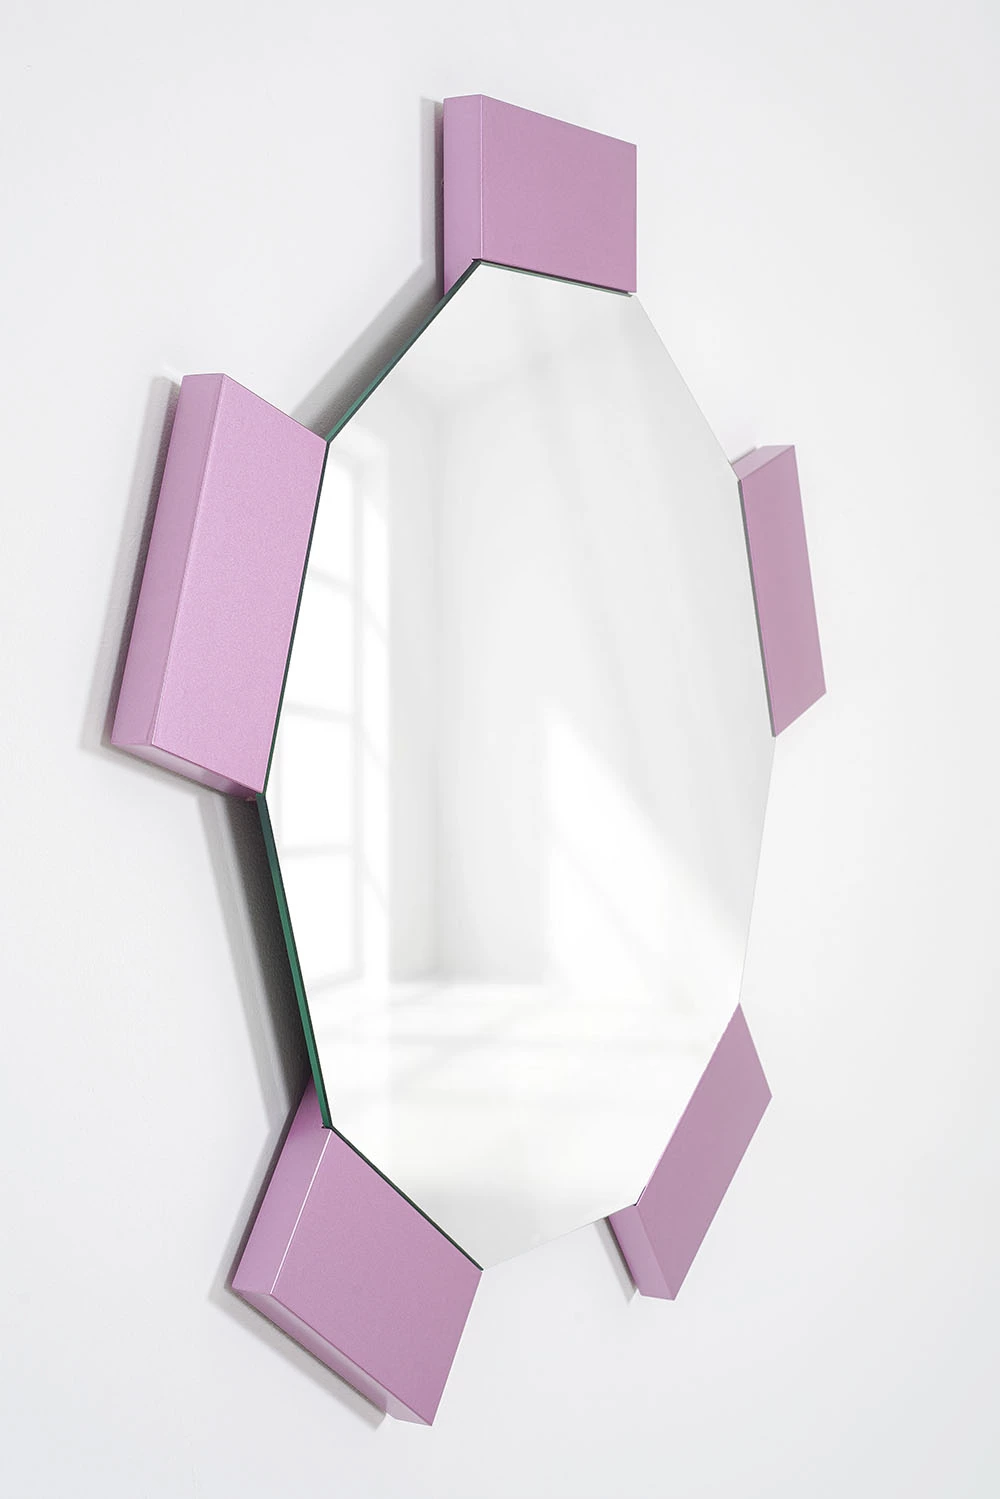 Mini Satellite 5 Mirror - Pierre Charpin - Mirror - Galerie kreo